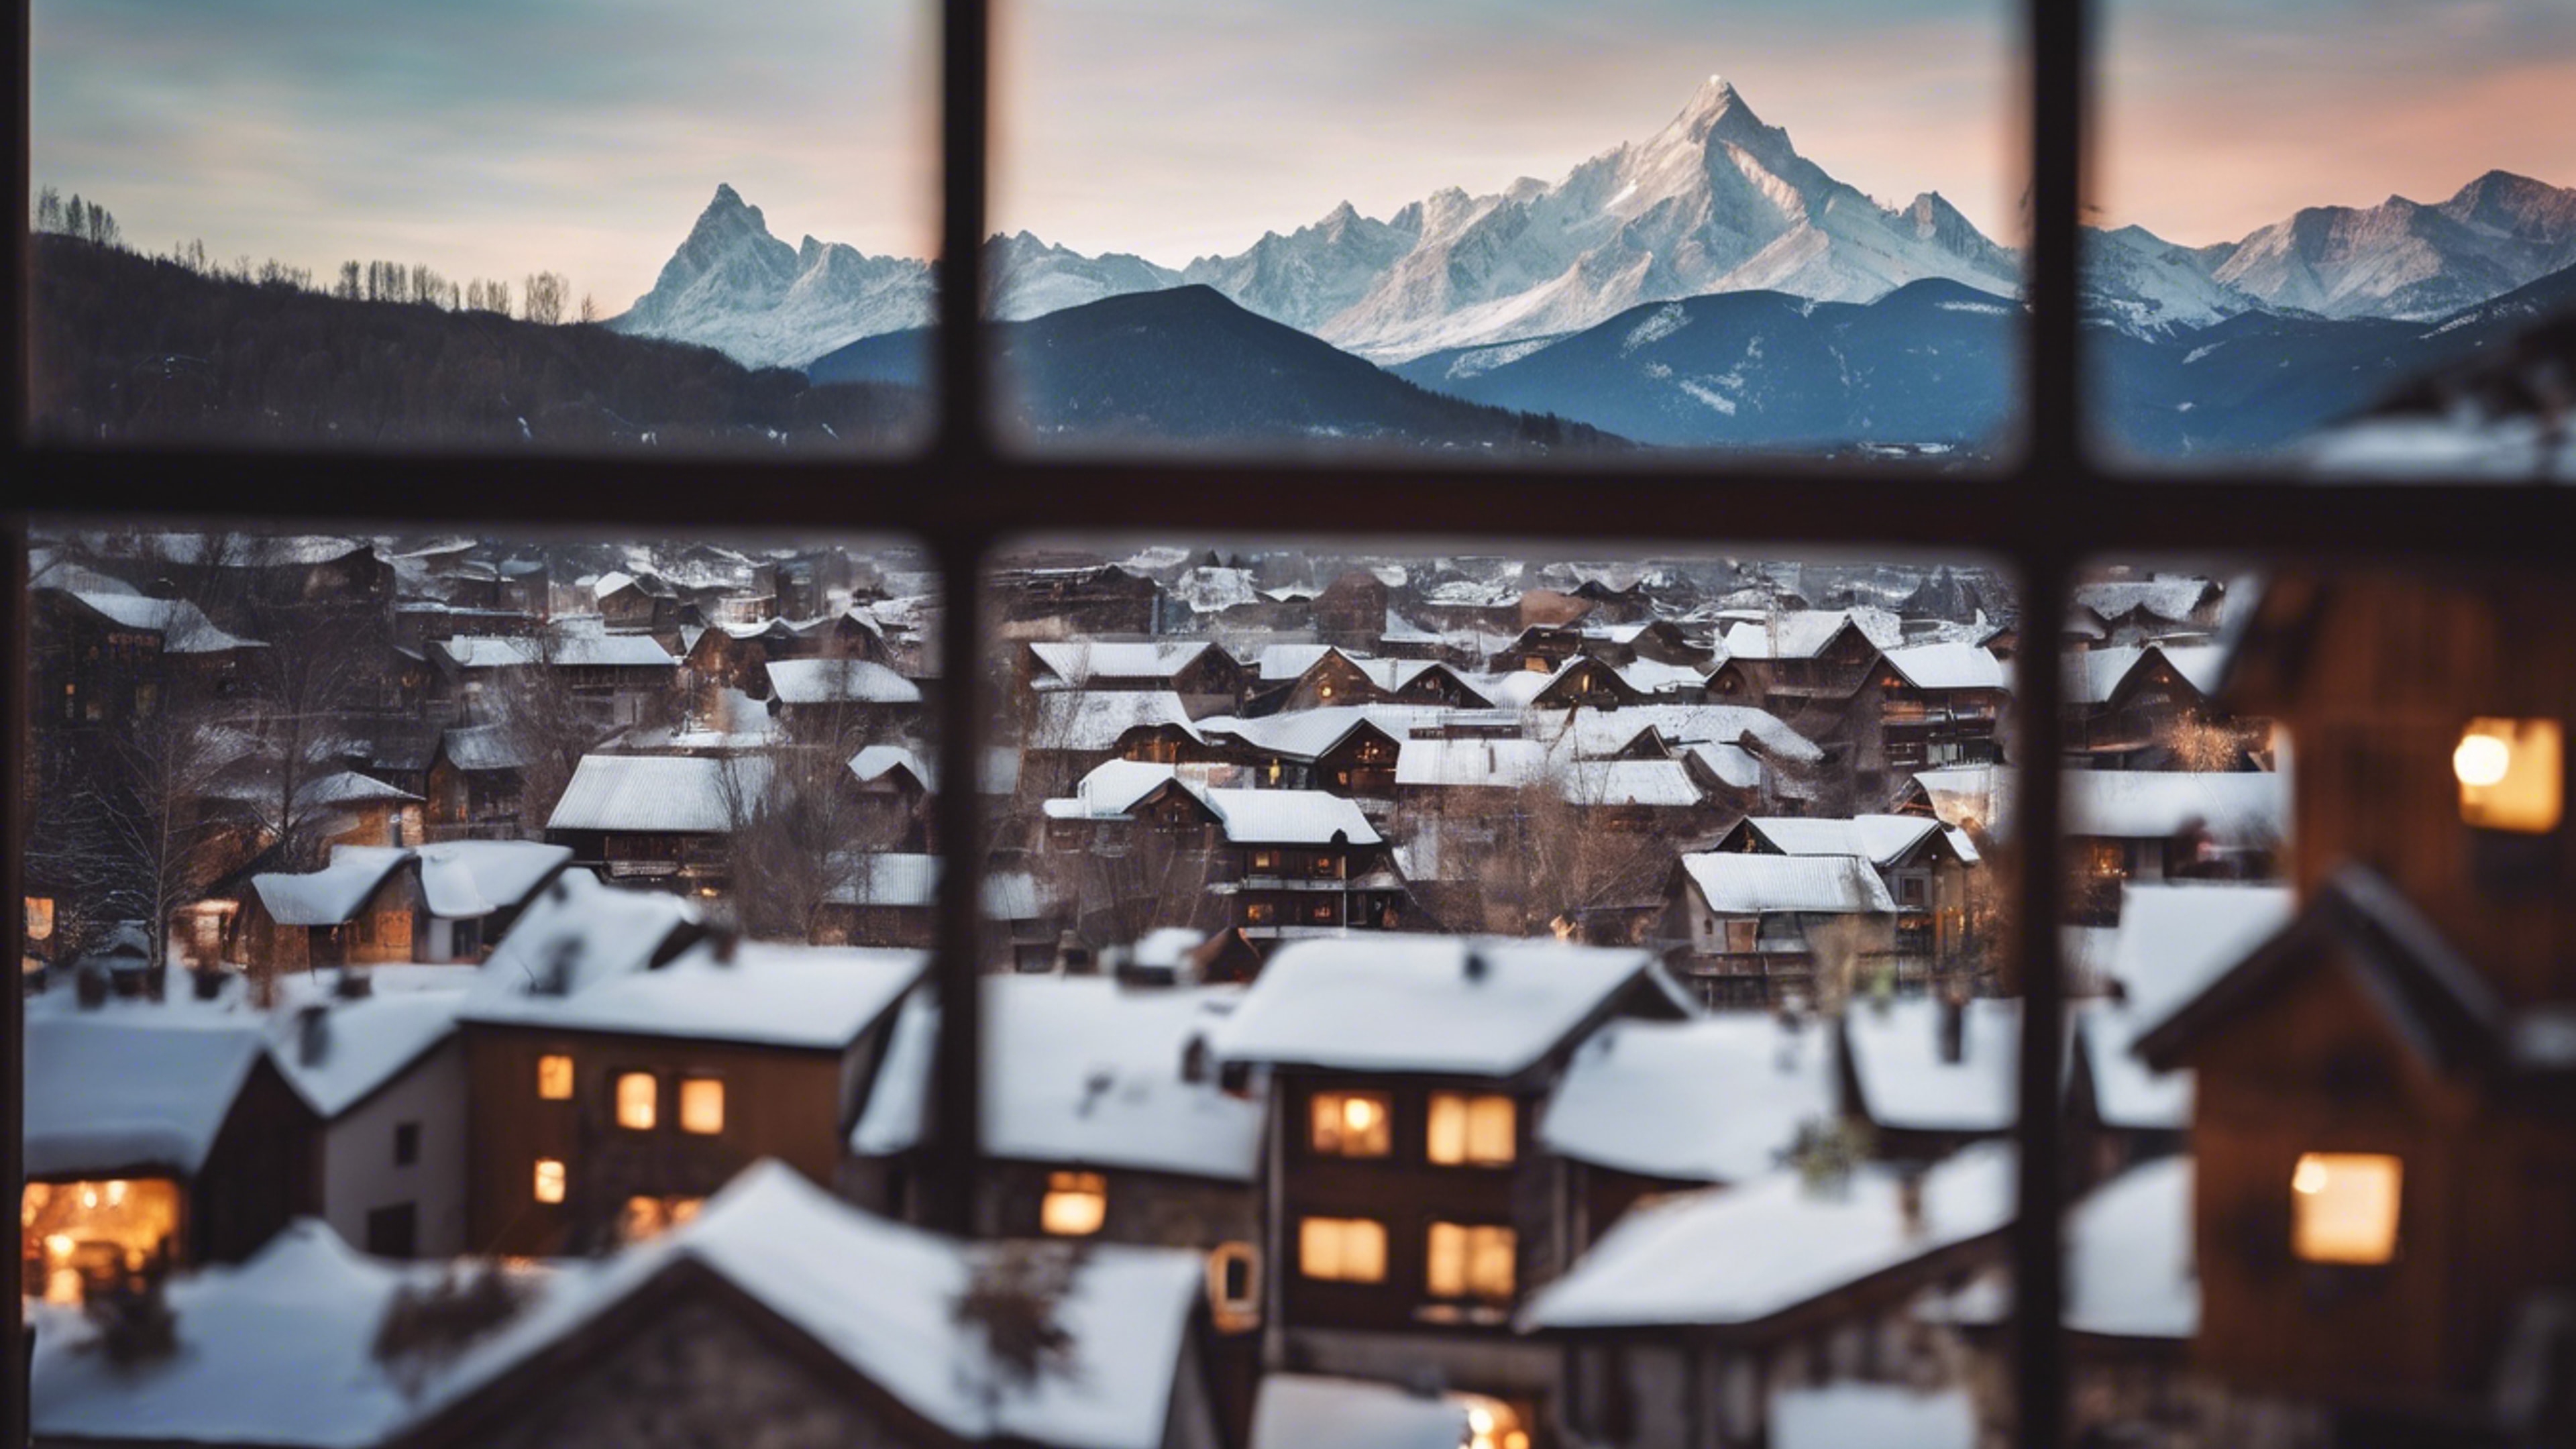 A rustic snowy skyline view of a toy-like mountain village seen through a window. Wallpaper[0025c80c4a674b29b45c]